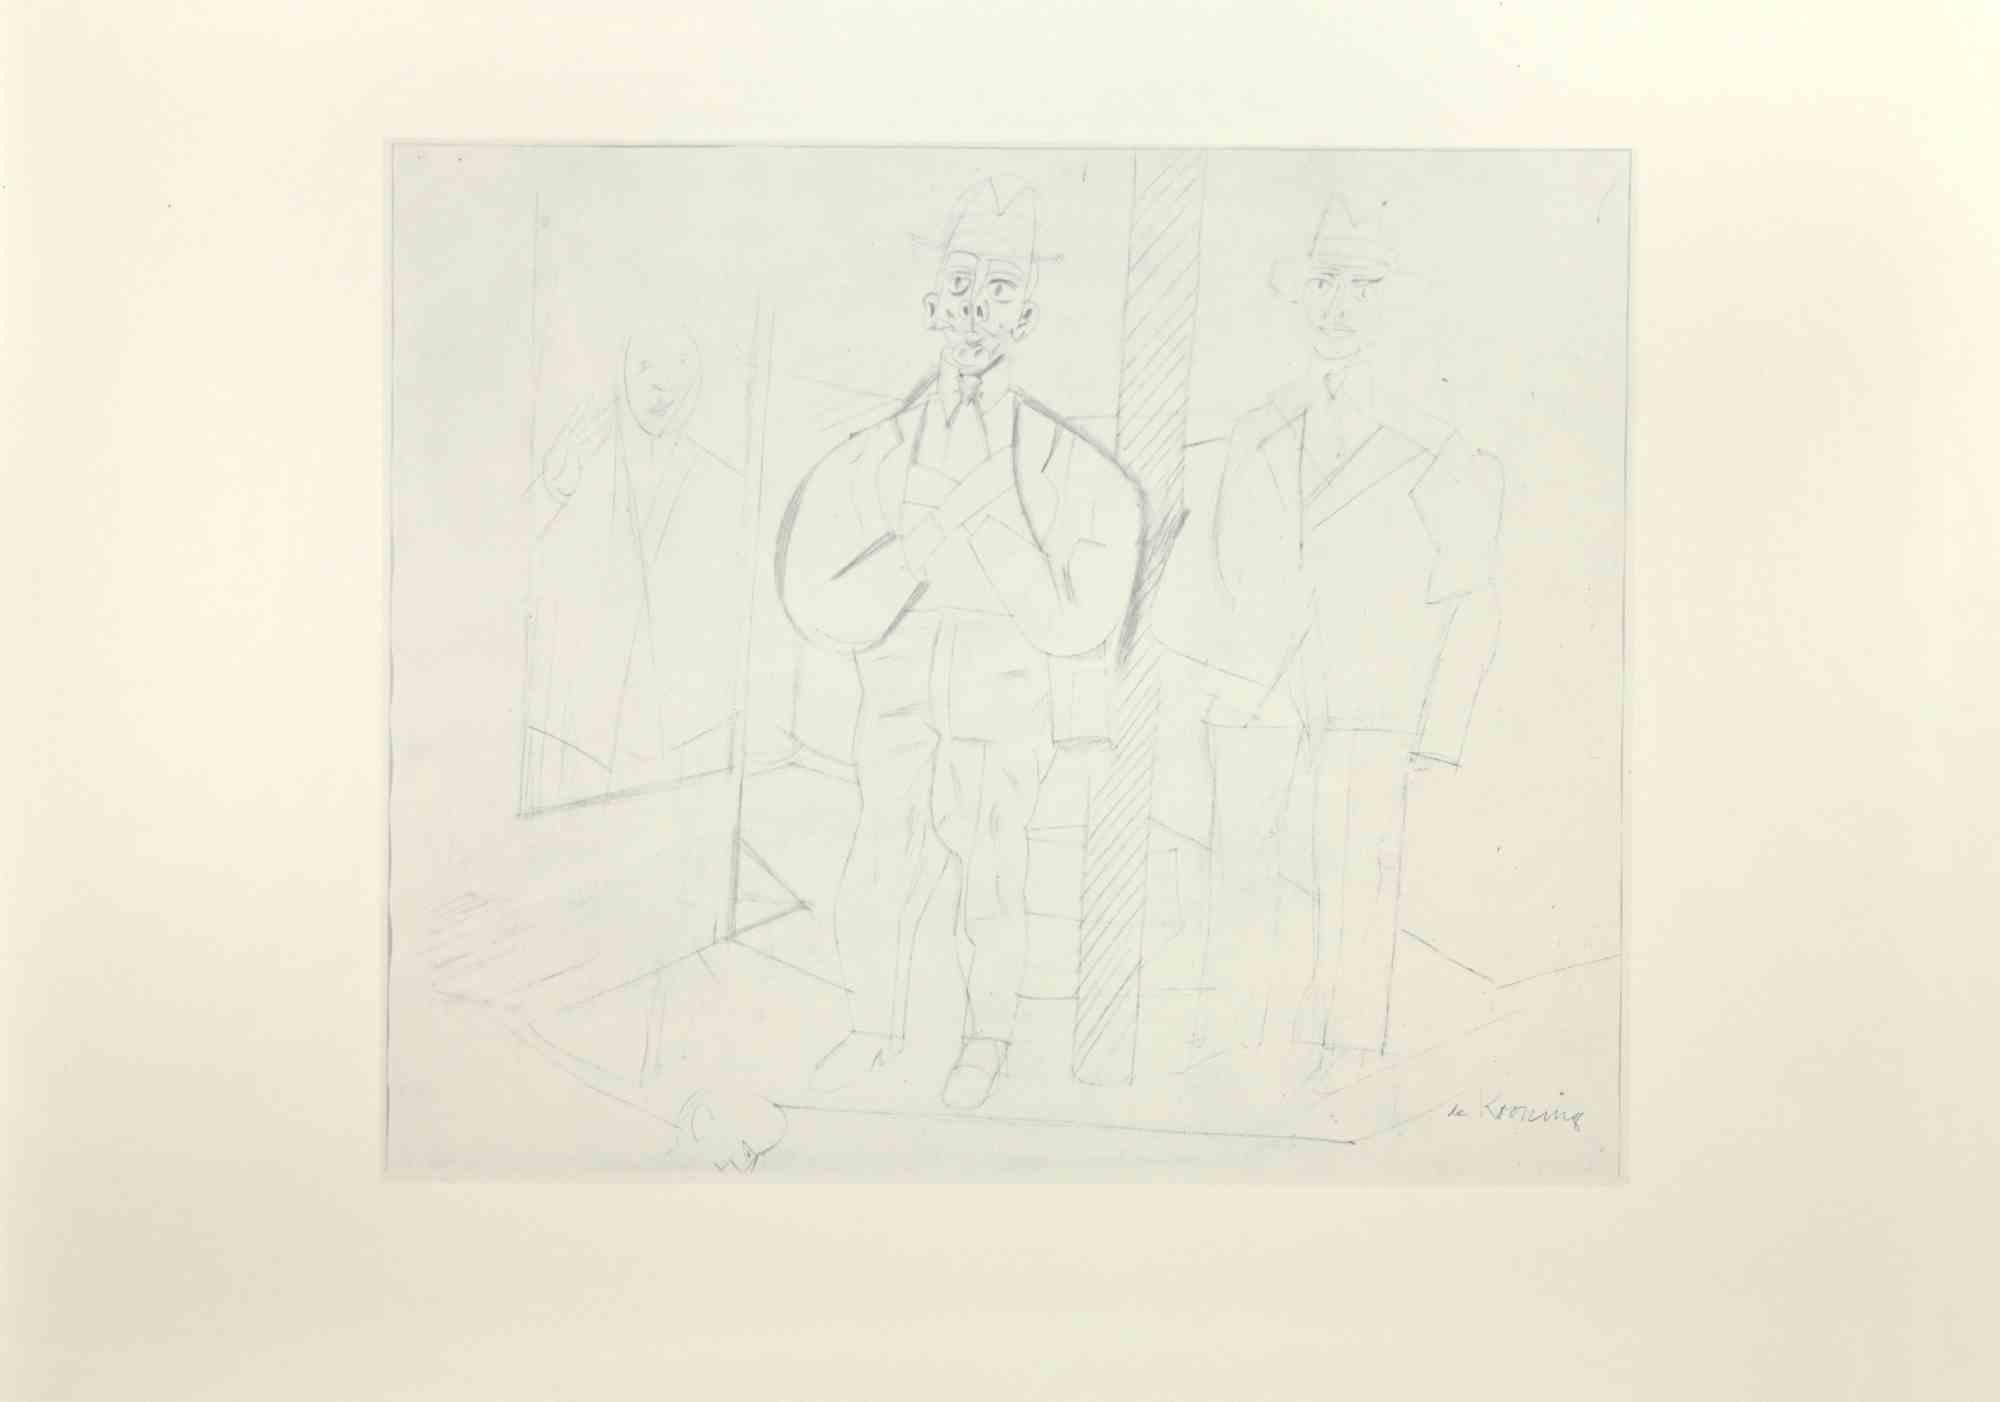 Self-Manikins - Offset and Lithograph after Willem De Kooning - 1985